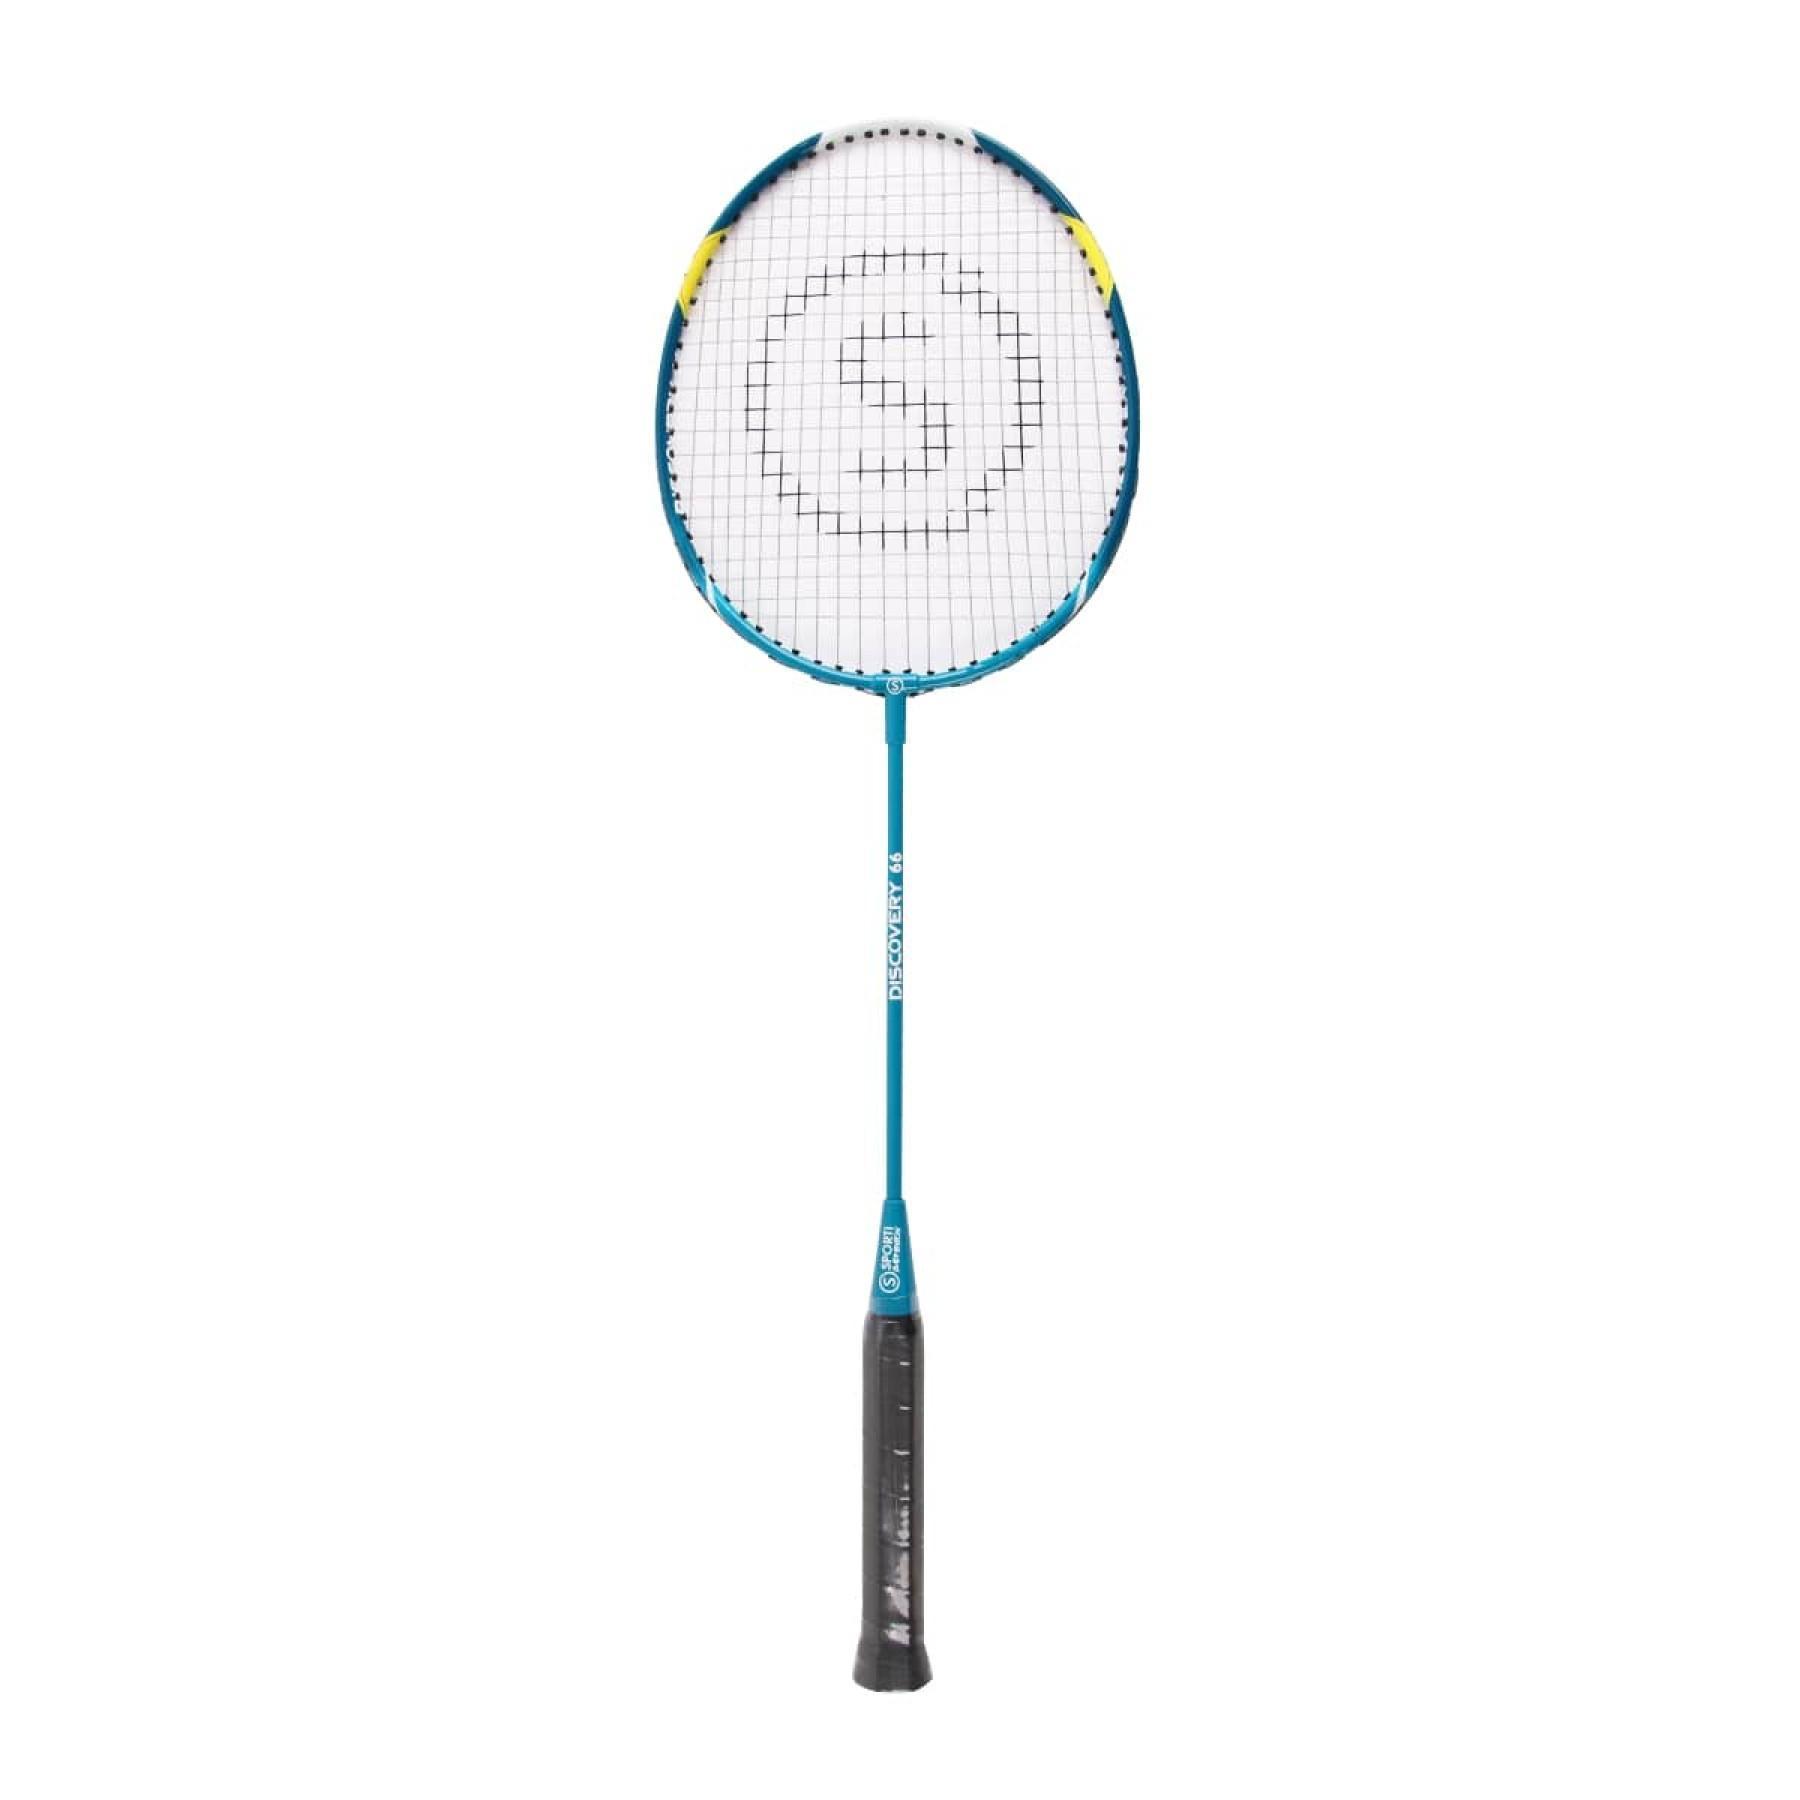 Racket Sporti badminton Initiation Discovery 66